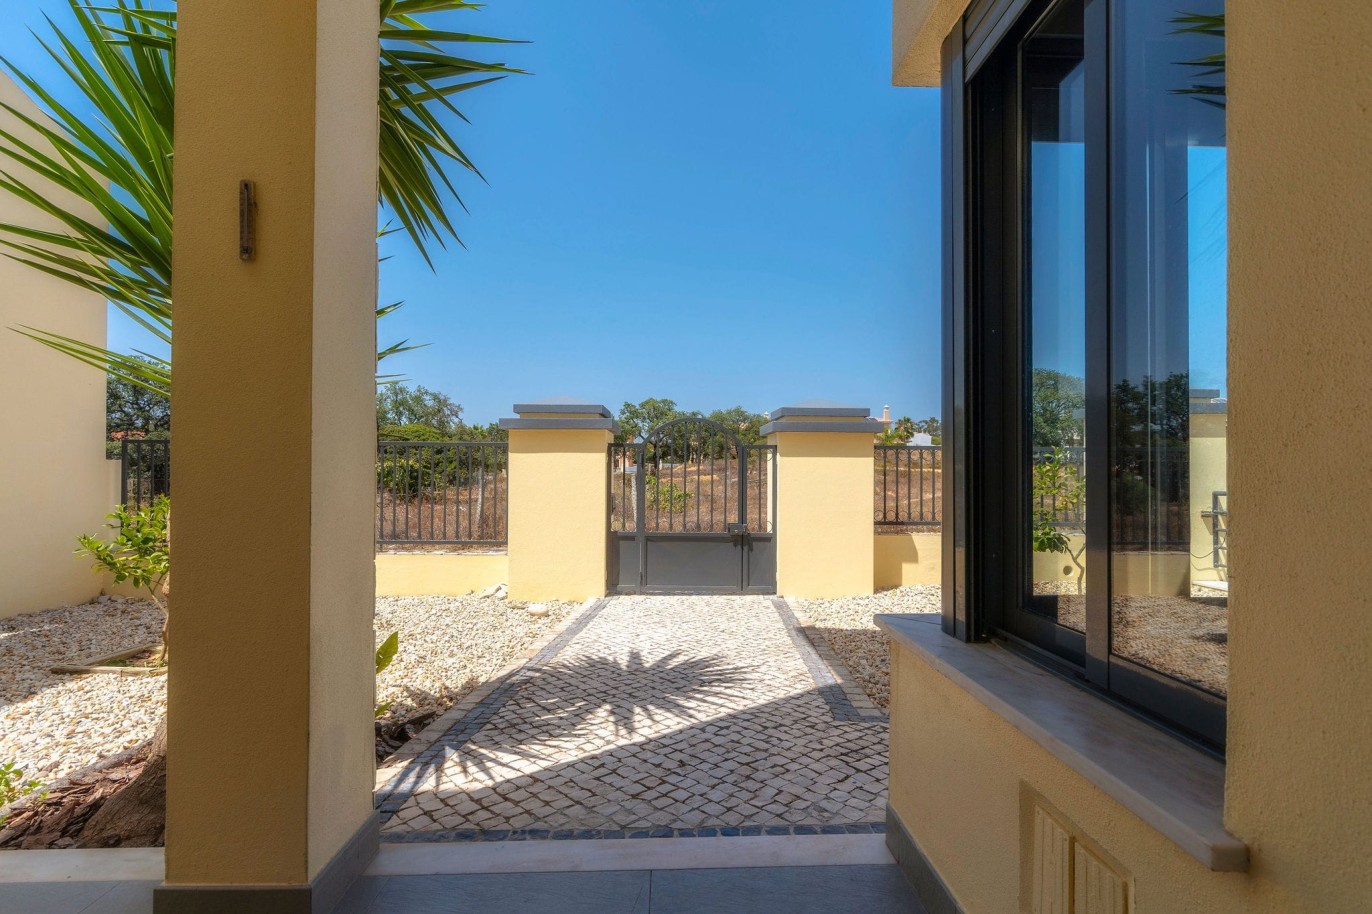 3+1 bedroom villa & 2 bedroom apartment for sale in Quarteira, Algarve_240764